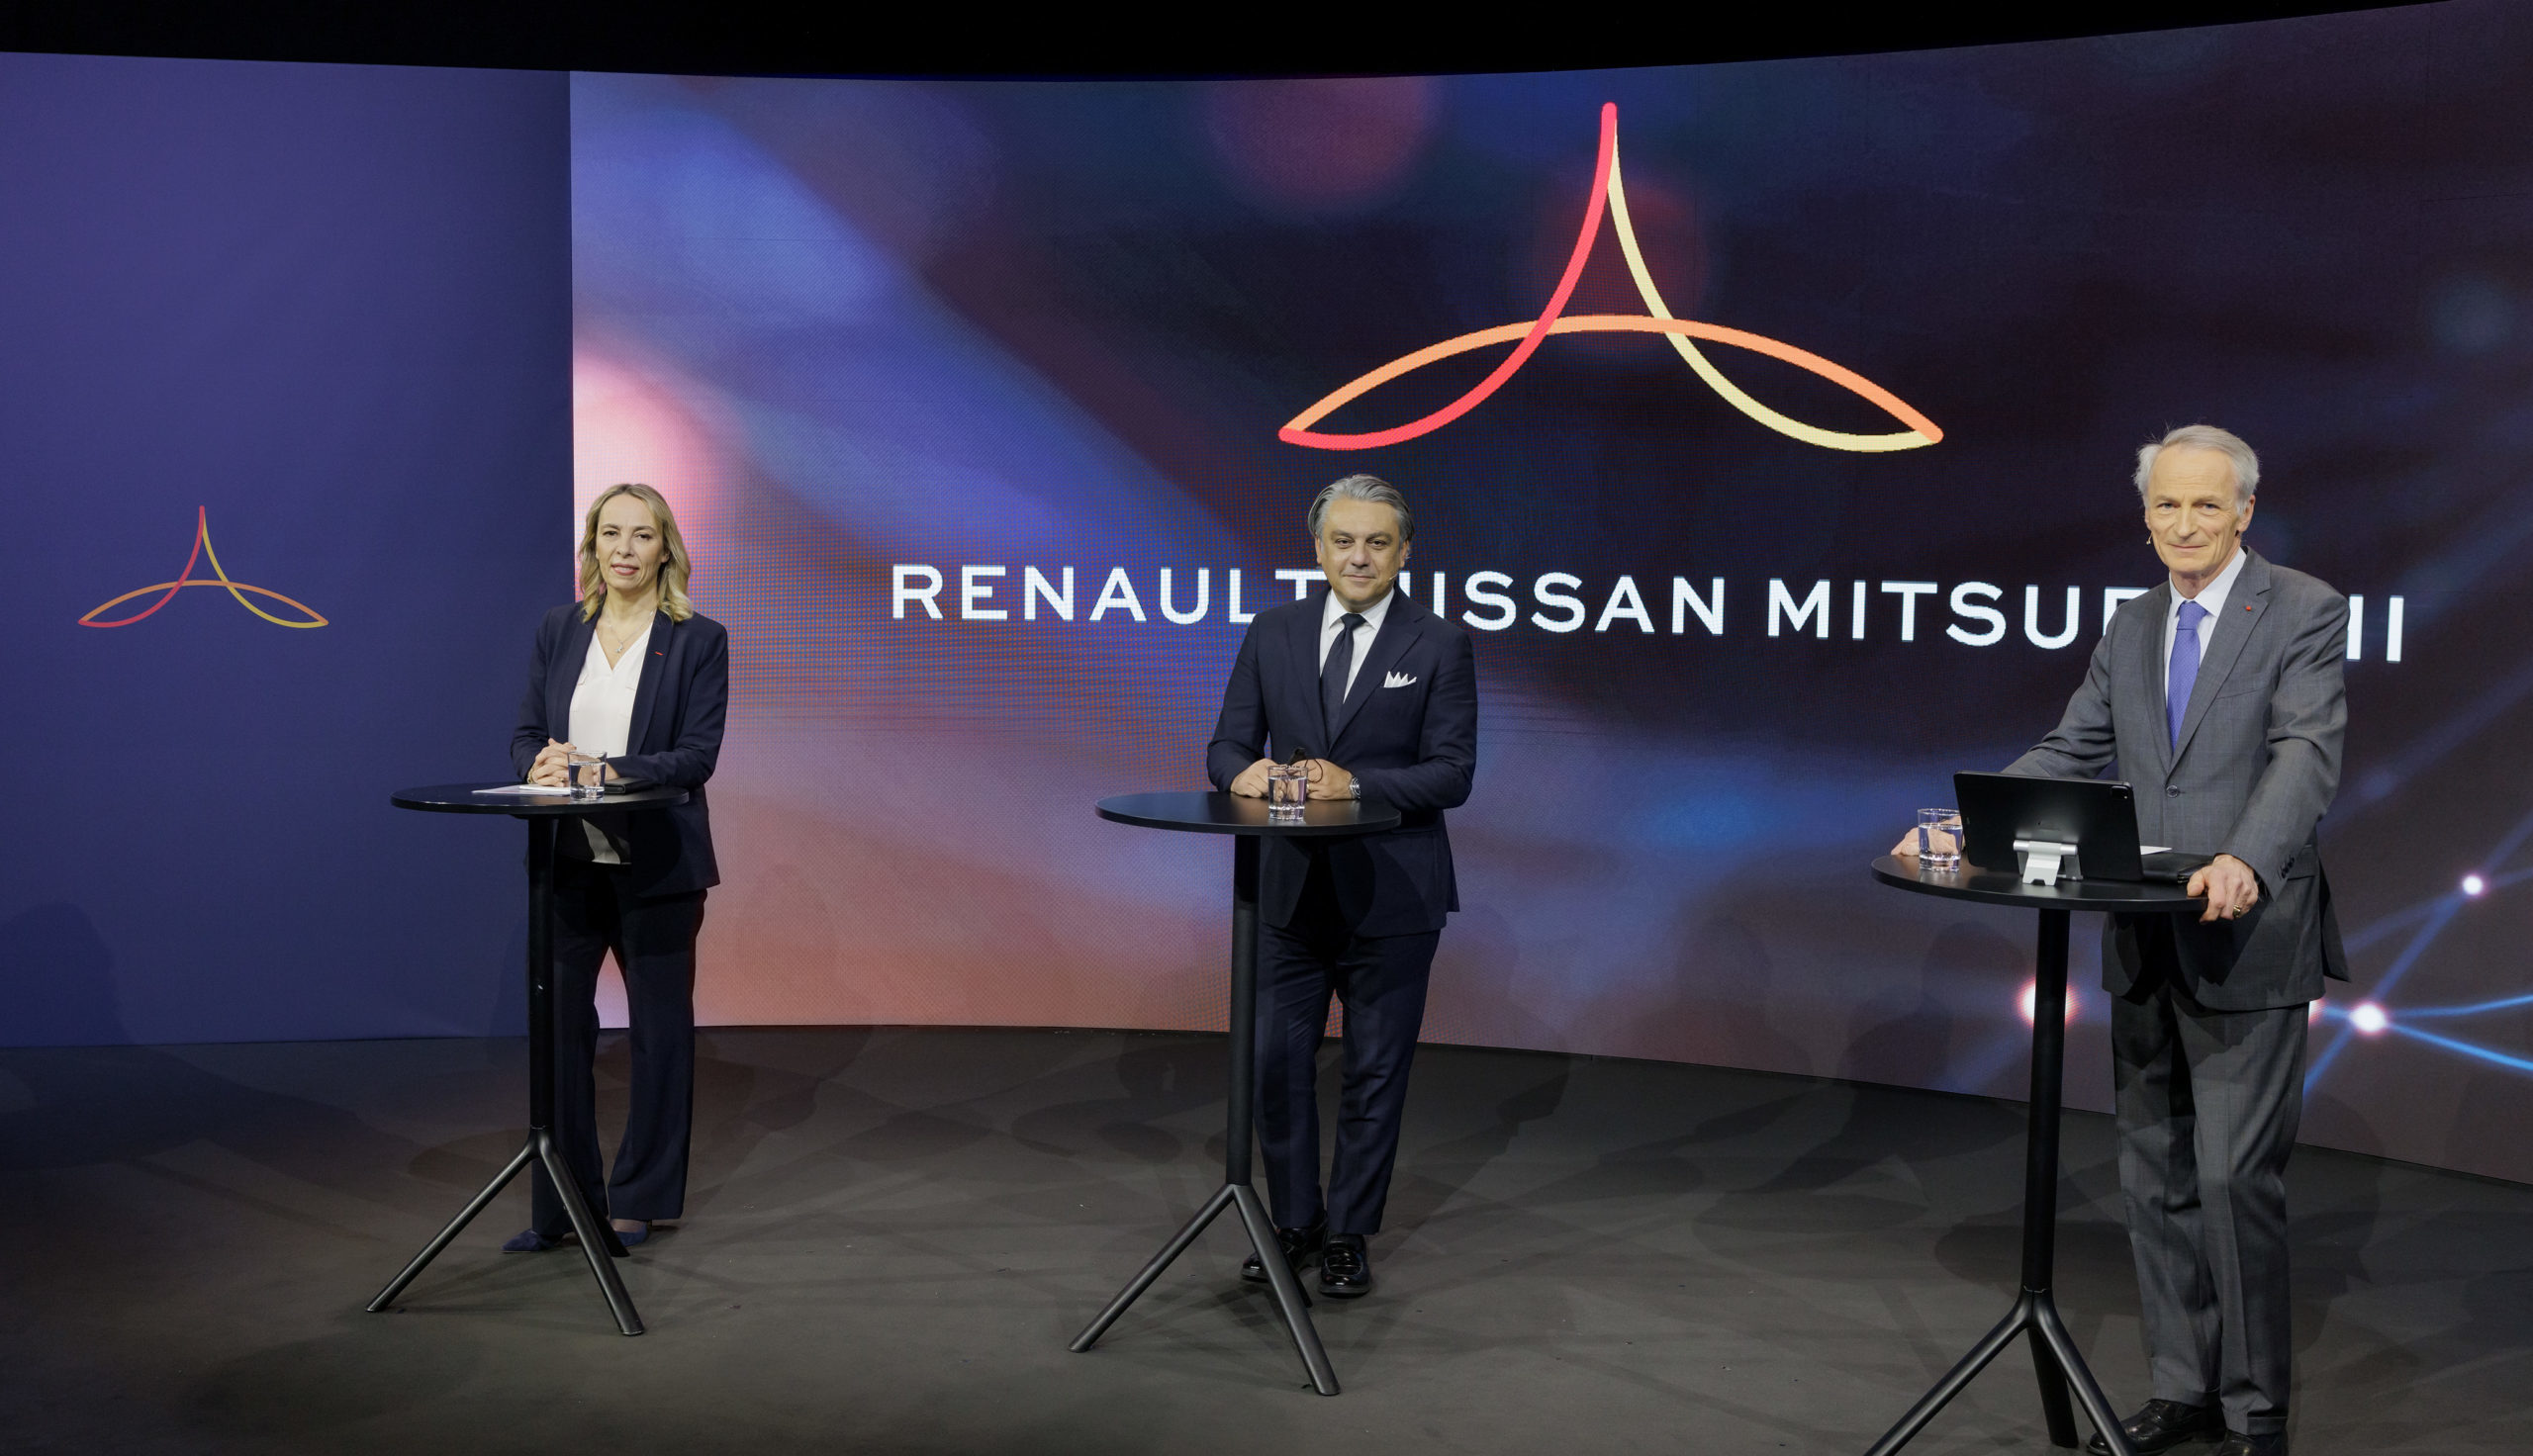 Clotilde Delbos, CFO of Renault, Luca De Meo, CEO of Renault, and Jean-Dominique Senard, Renault chairman